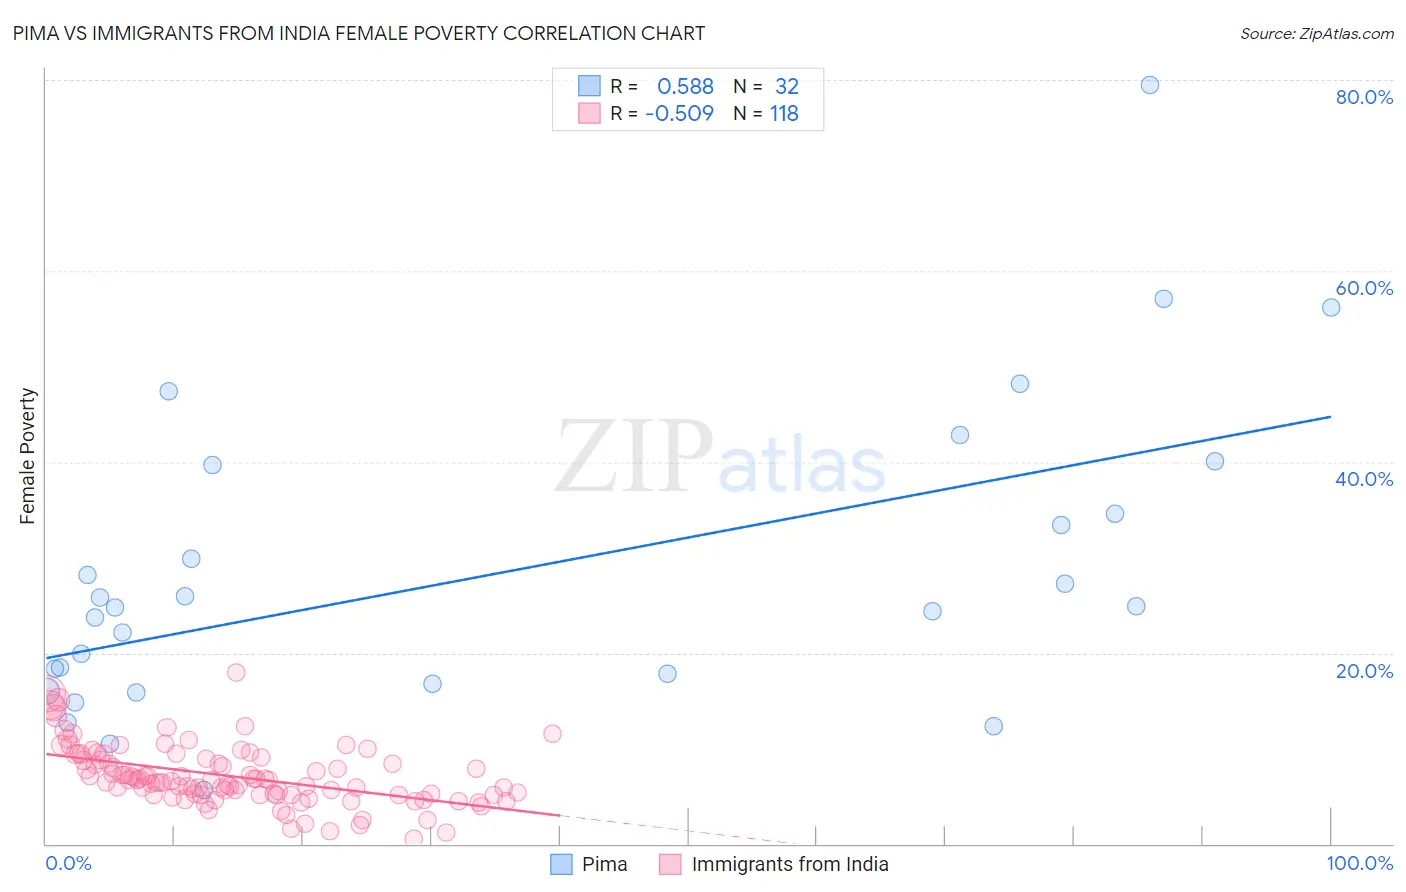 Pima vs Immigrants from India Female Poverty